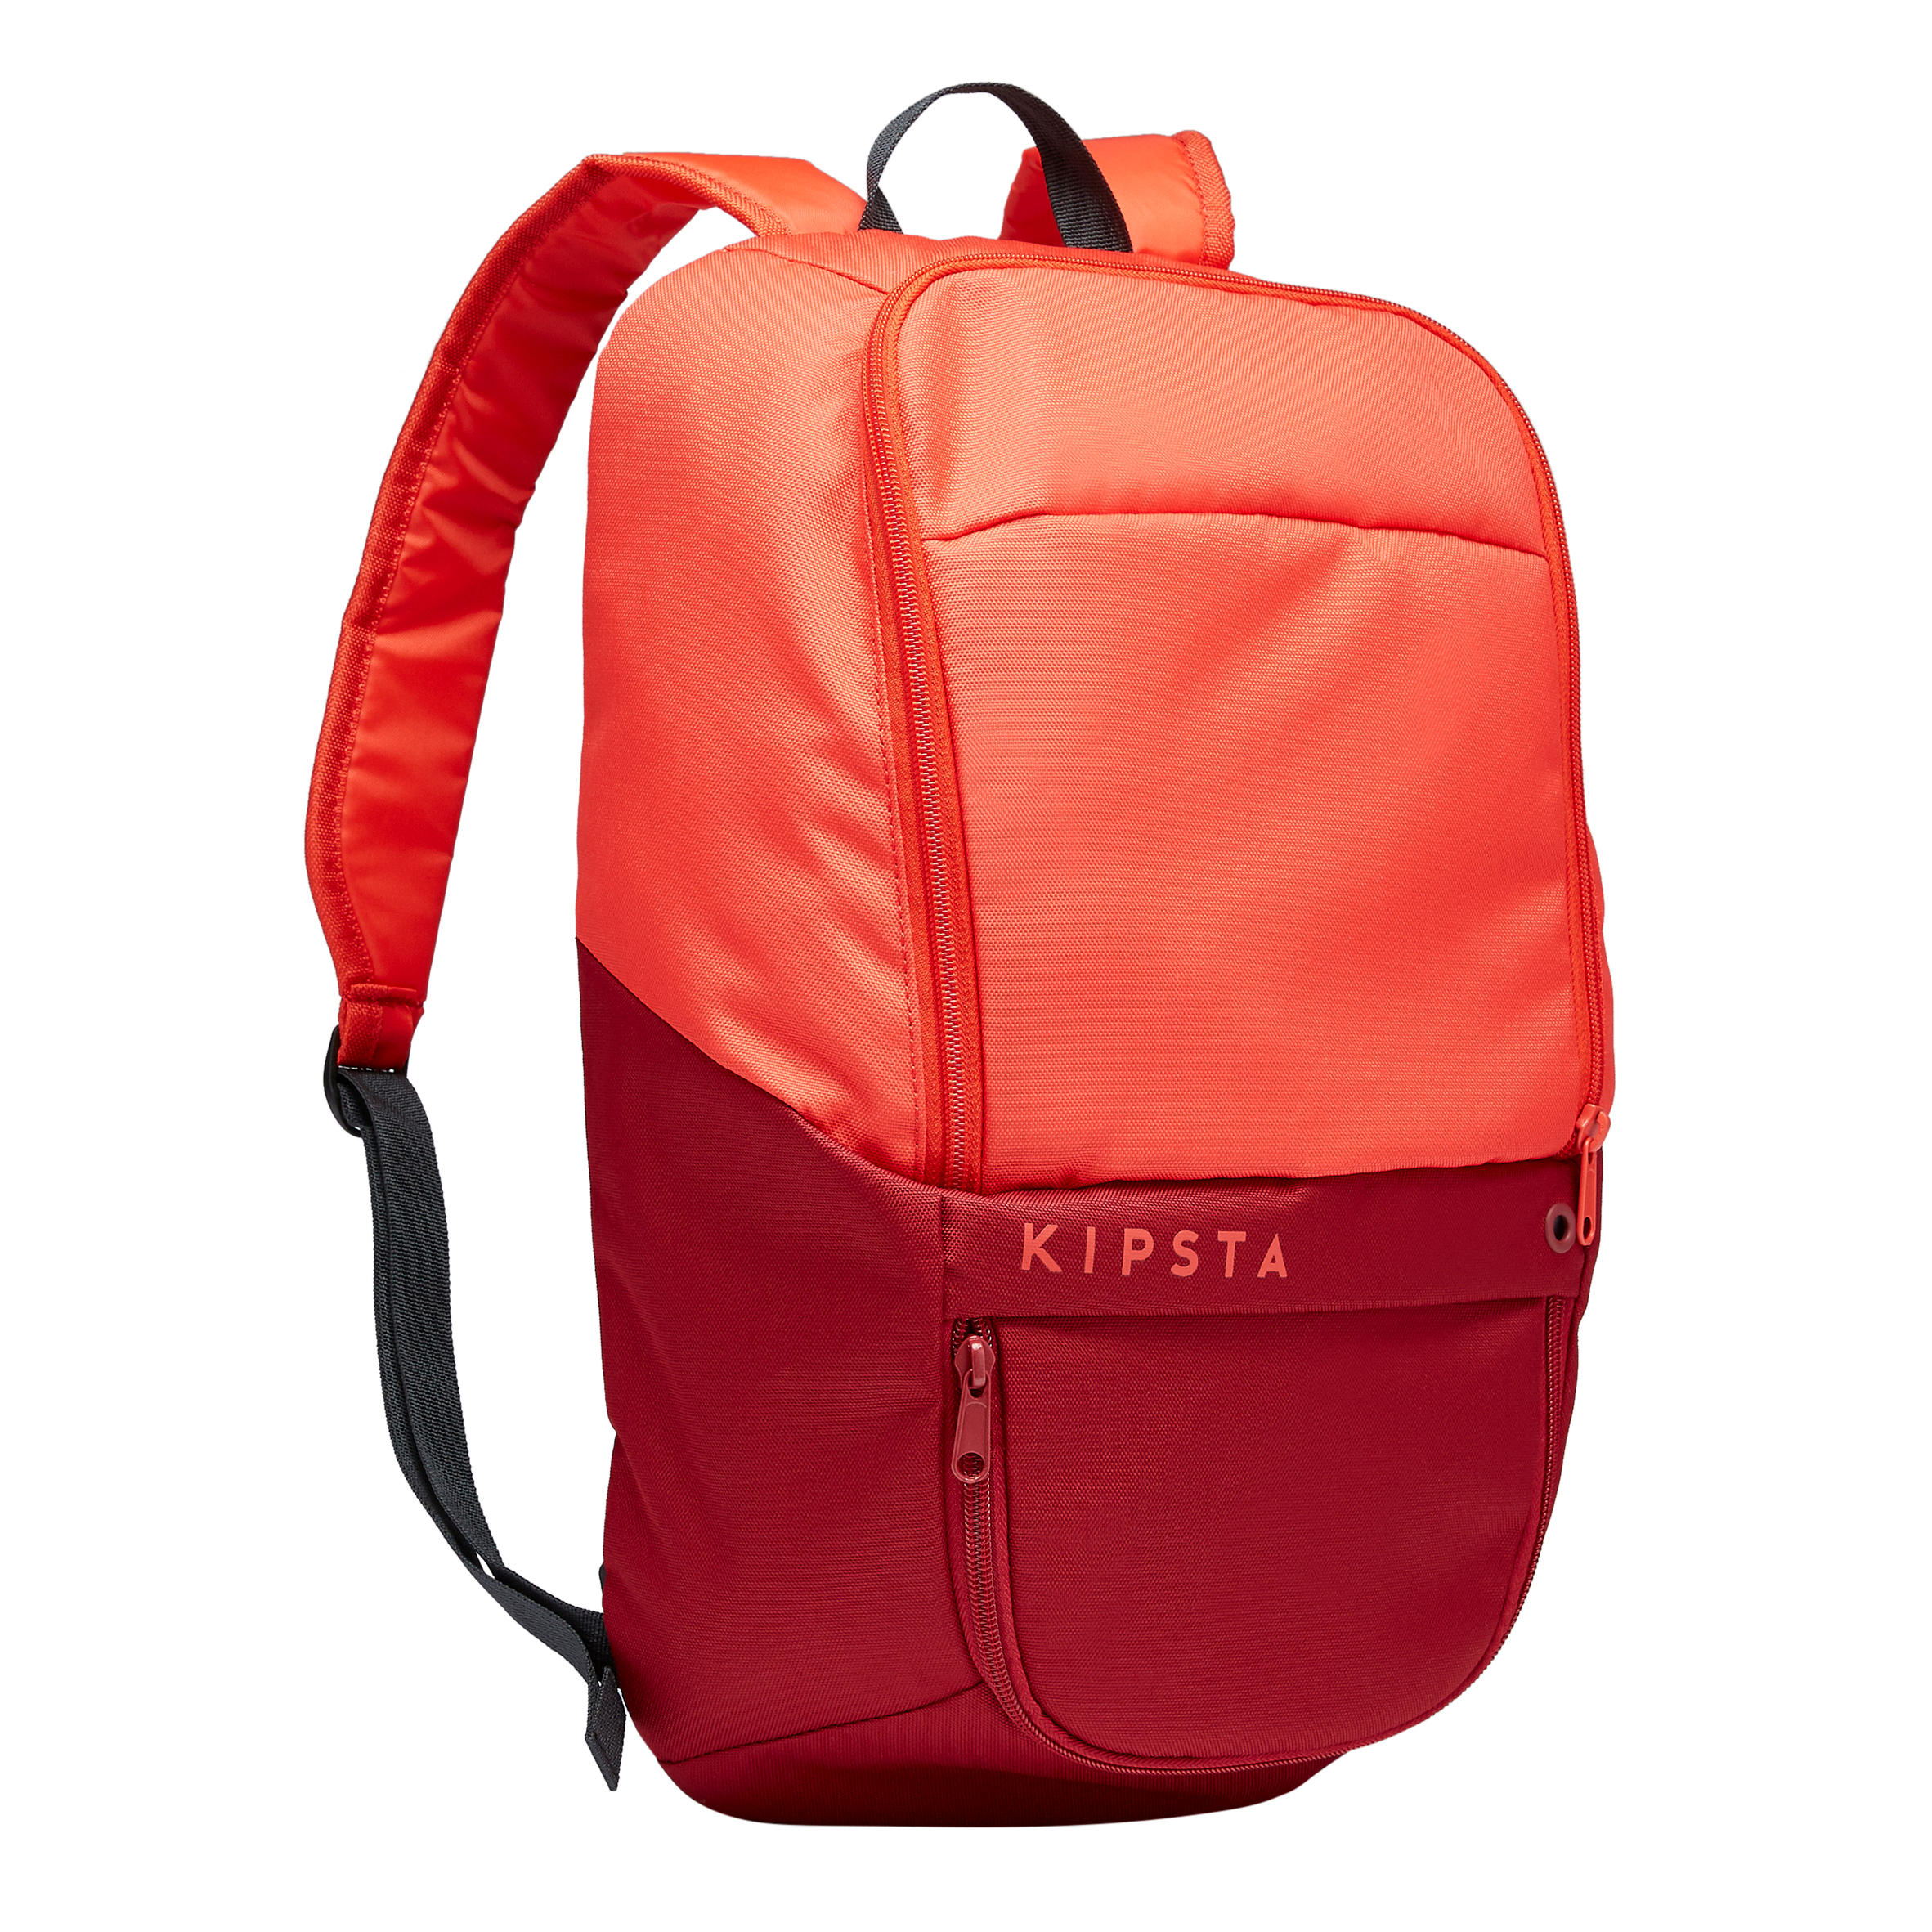 KIPSTA 17L Backpack ULPP - Coral/Red